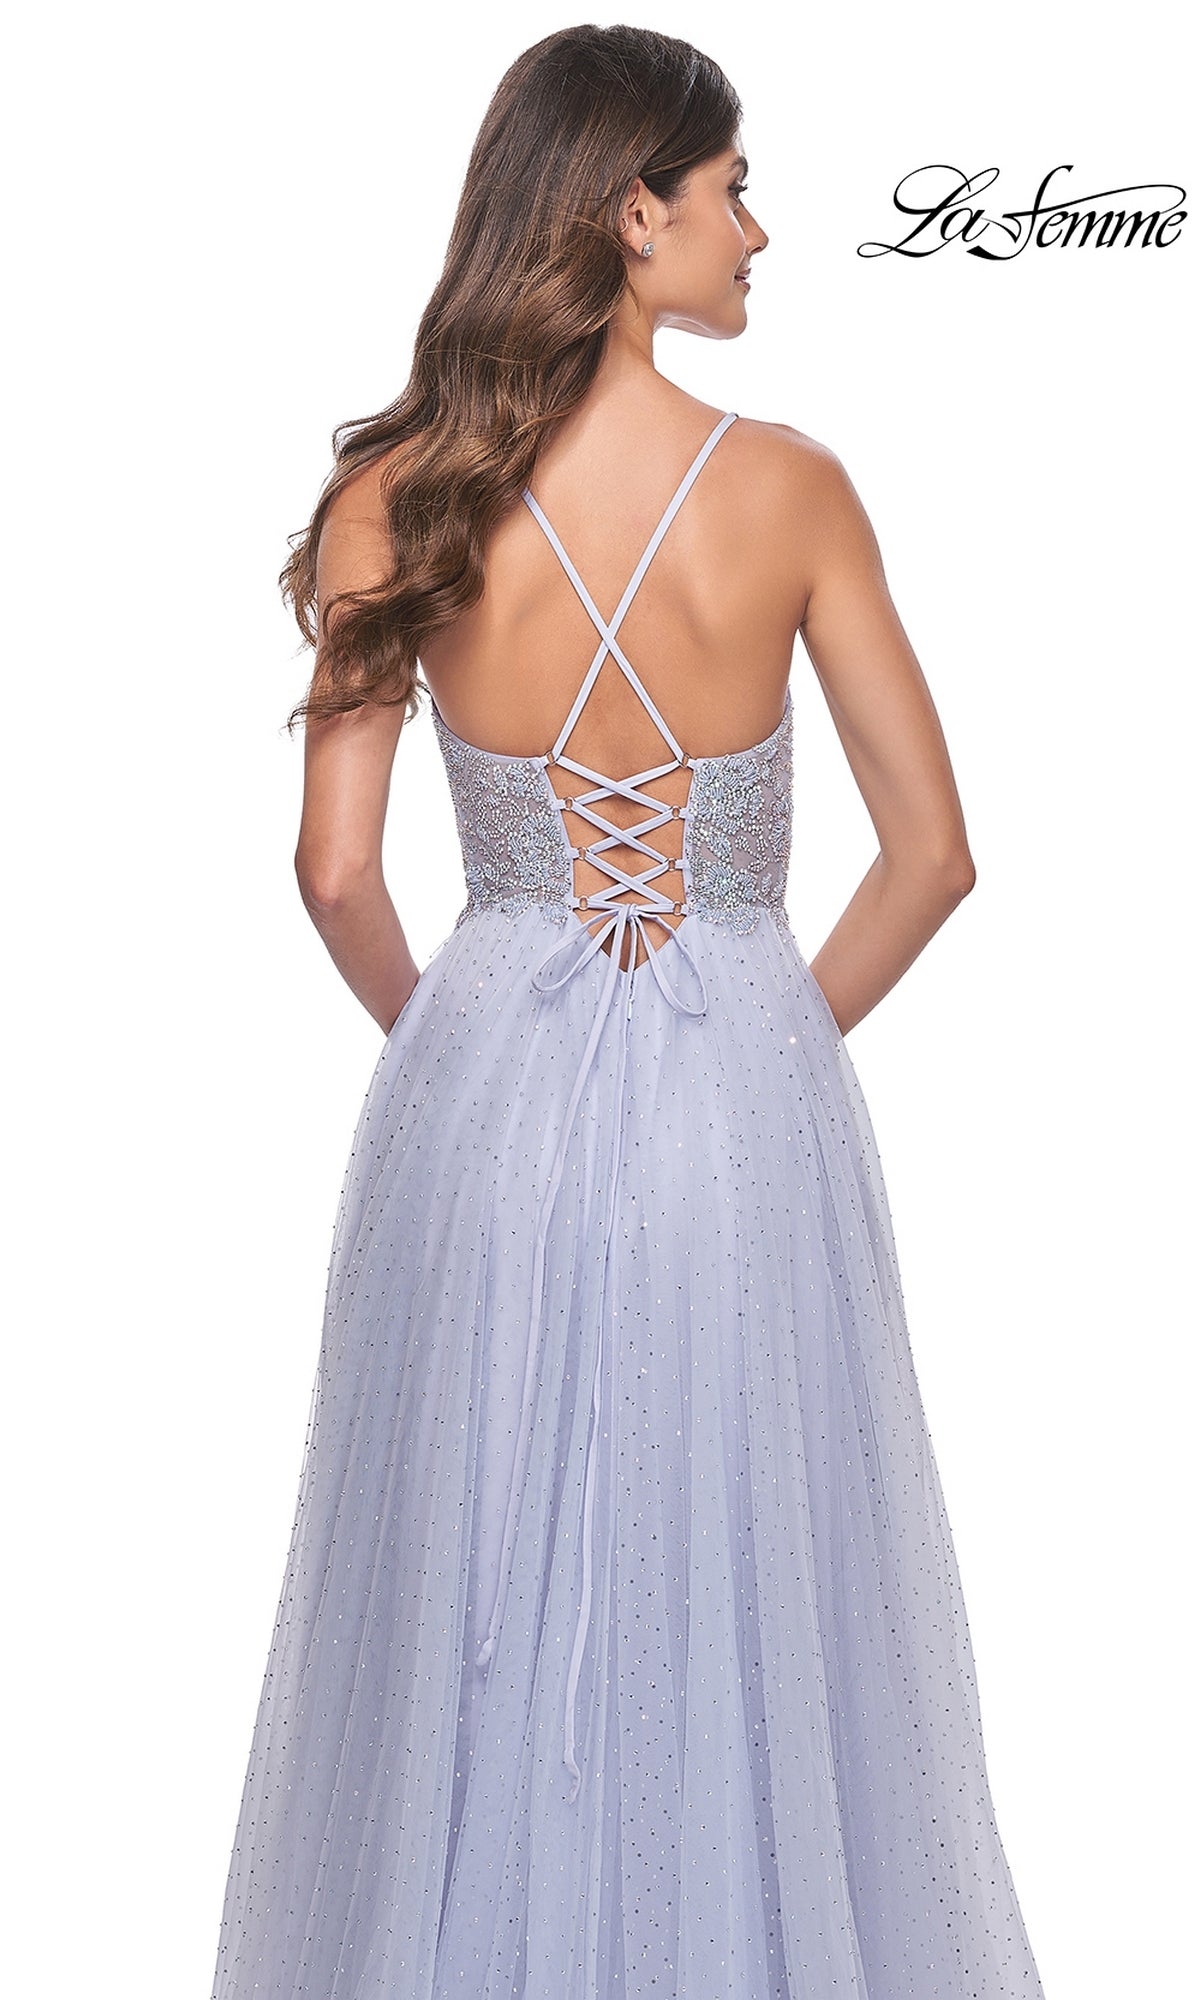 La Femme Long Prom Dress 32020